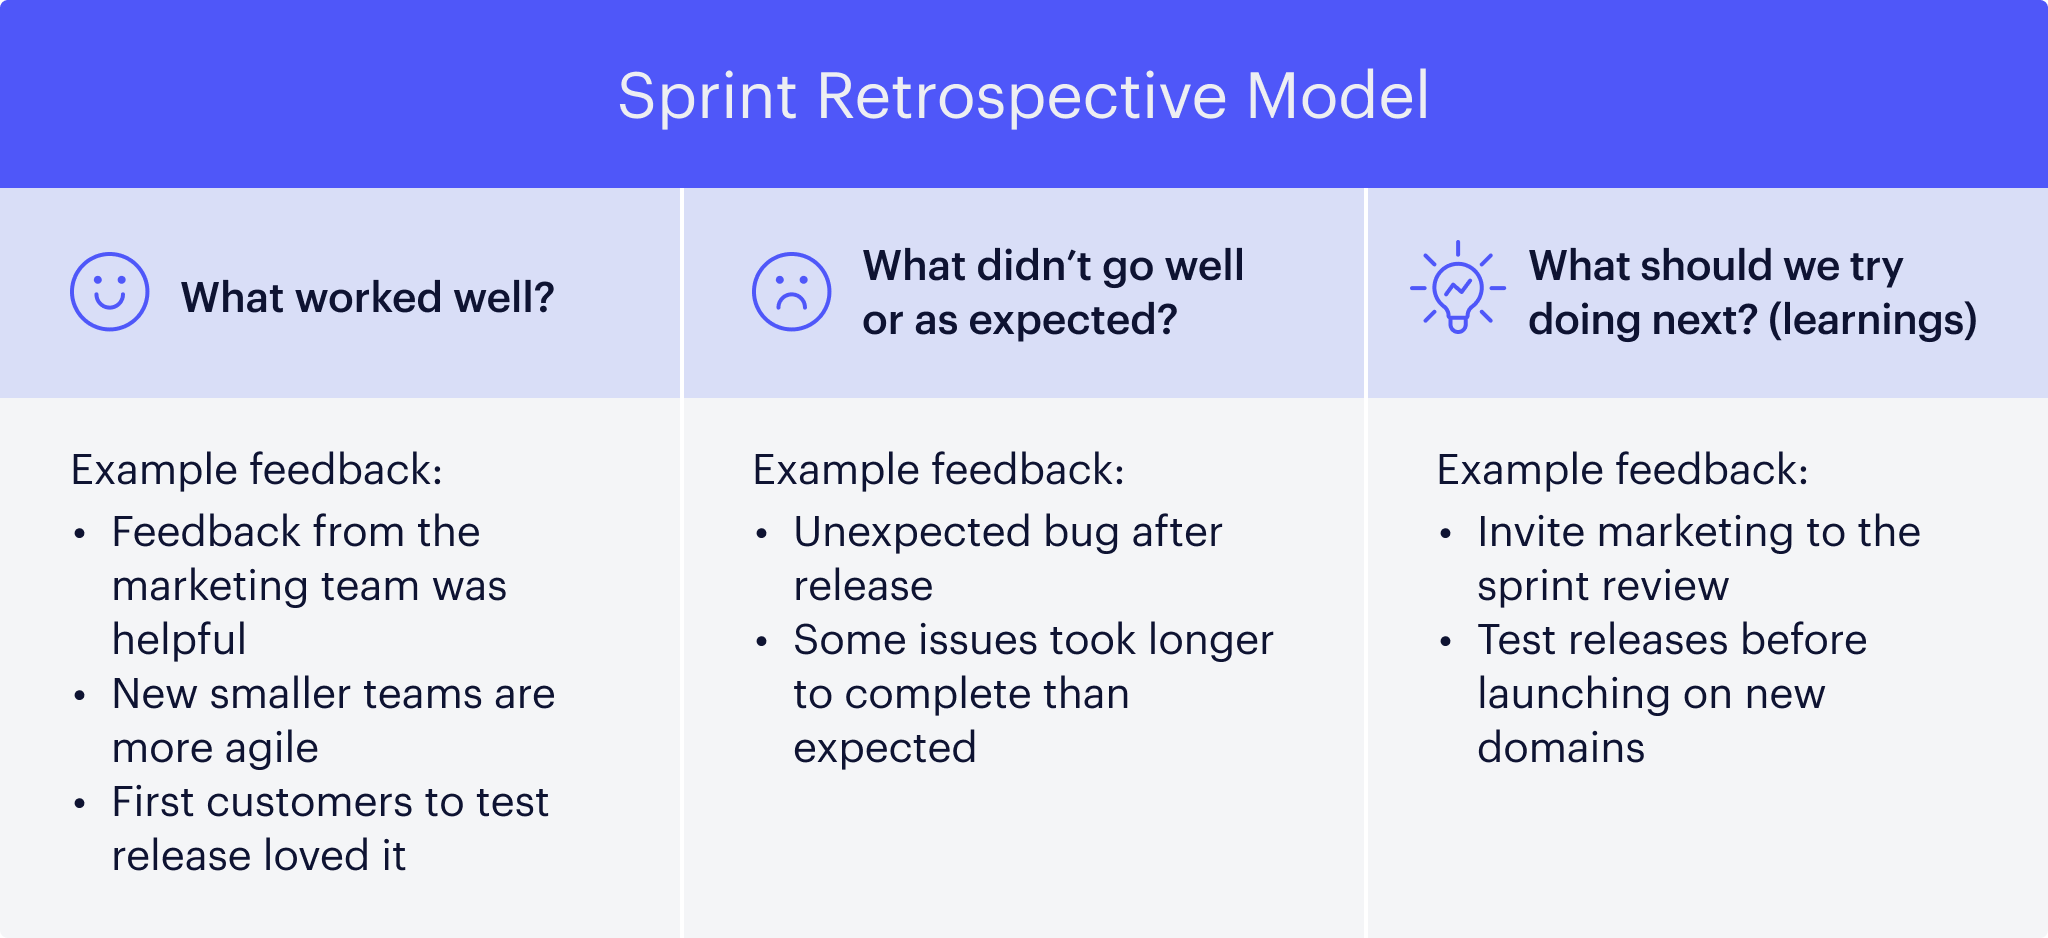 Sprint Retrospective Model